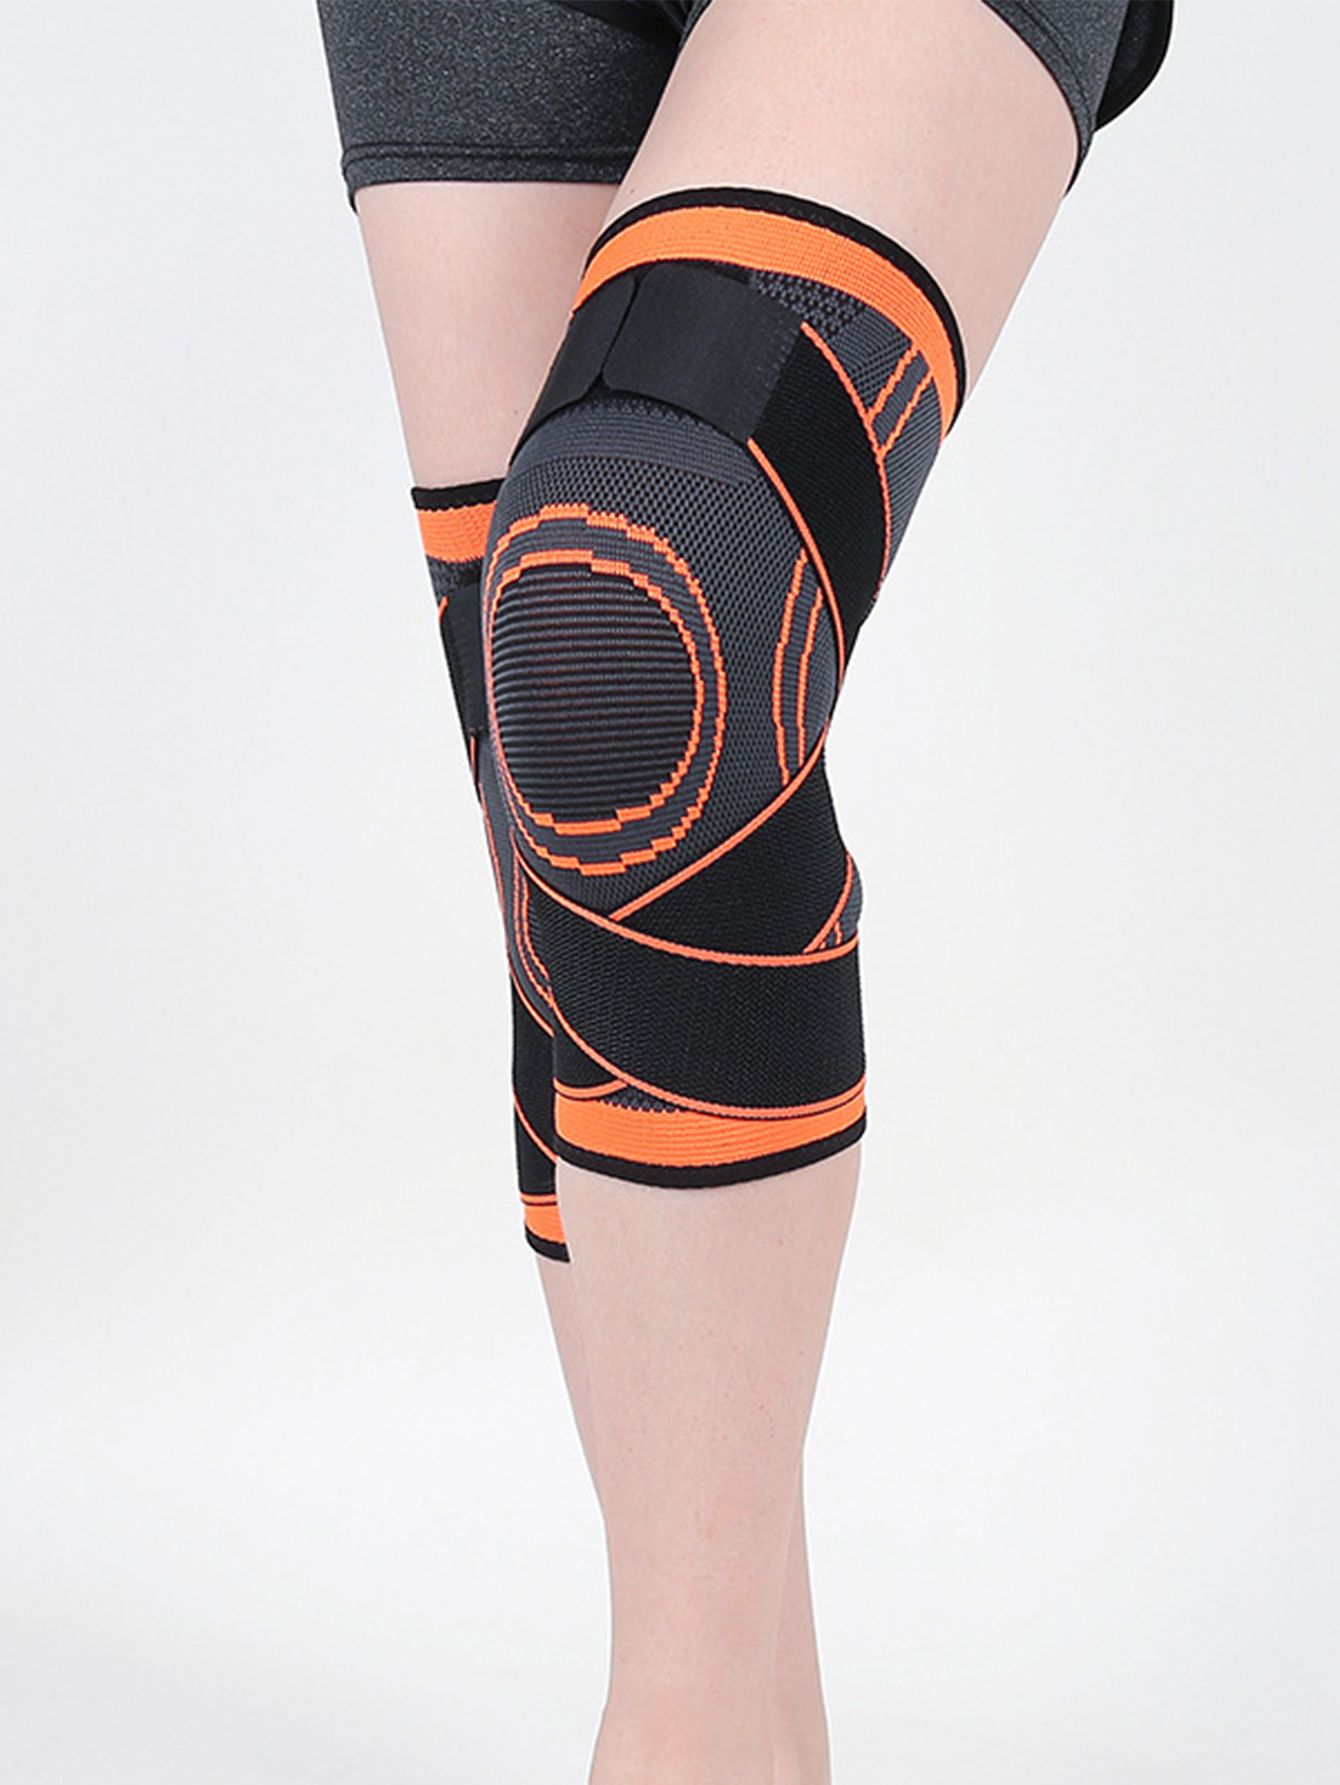 Lee-mat knee protective pad